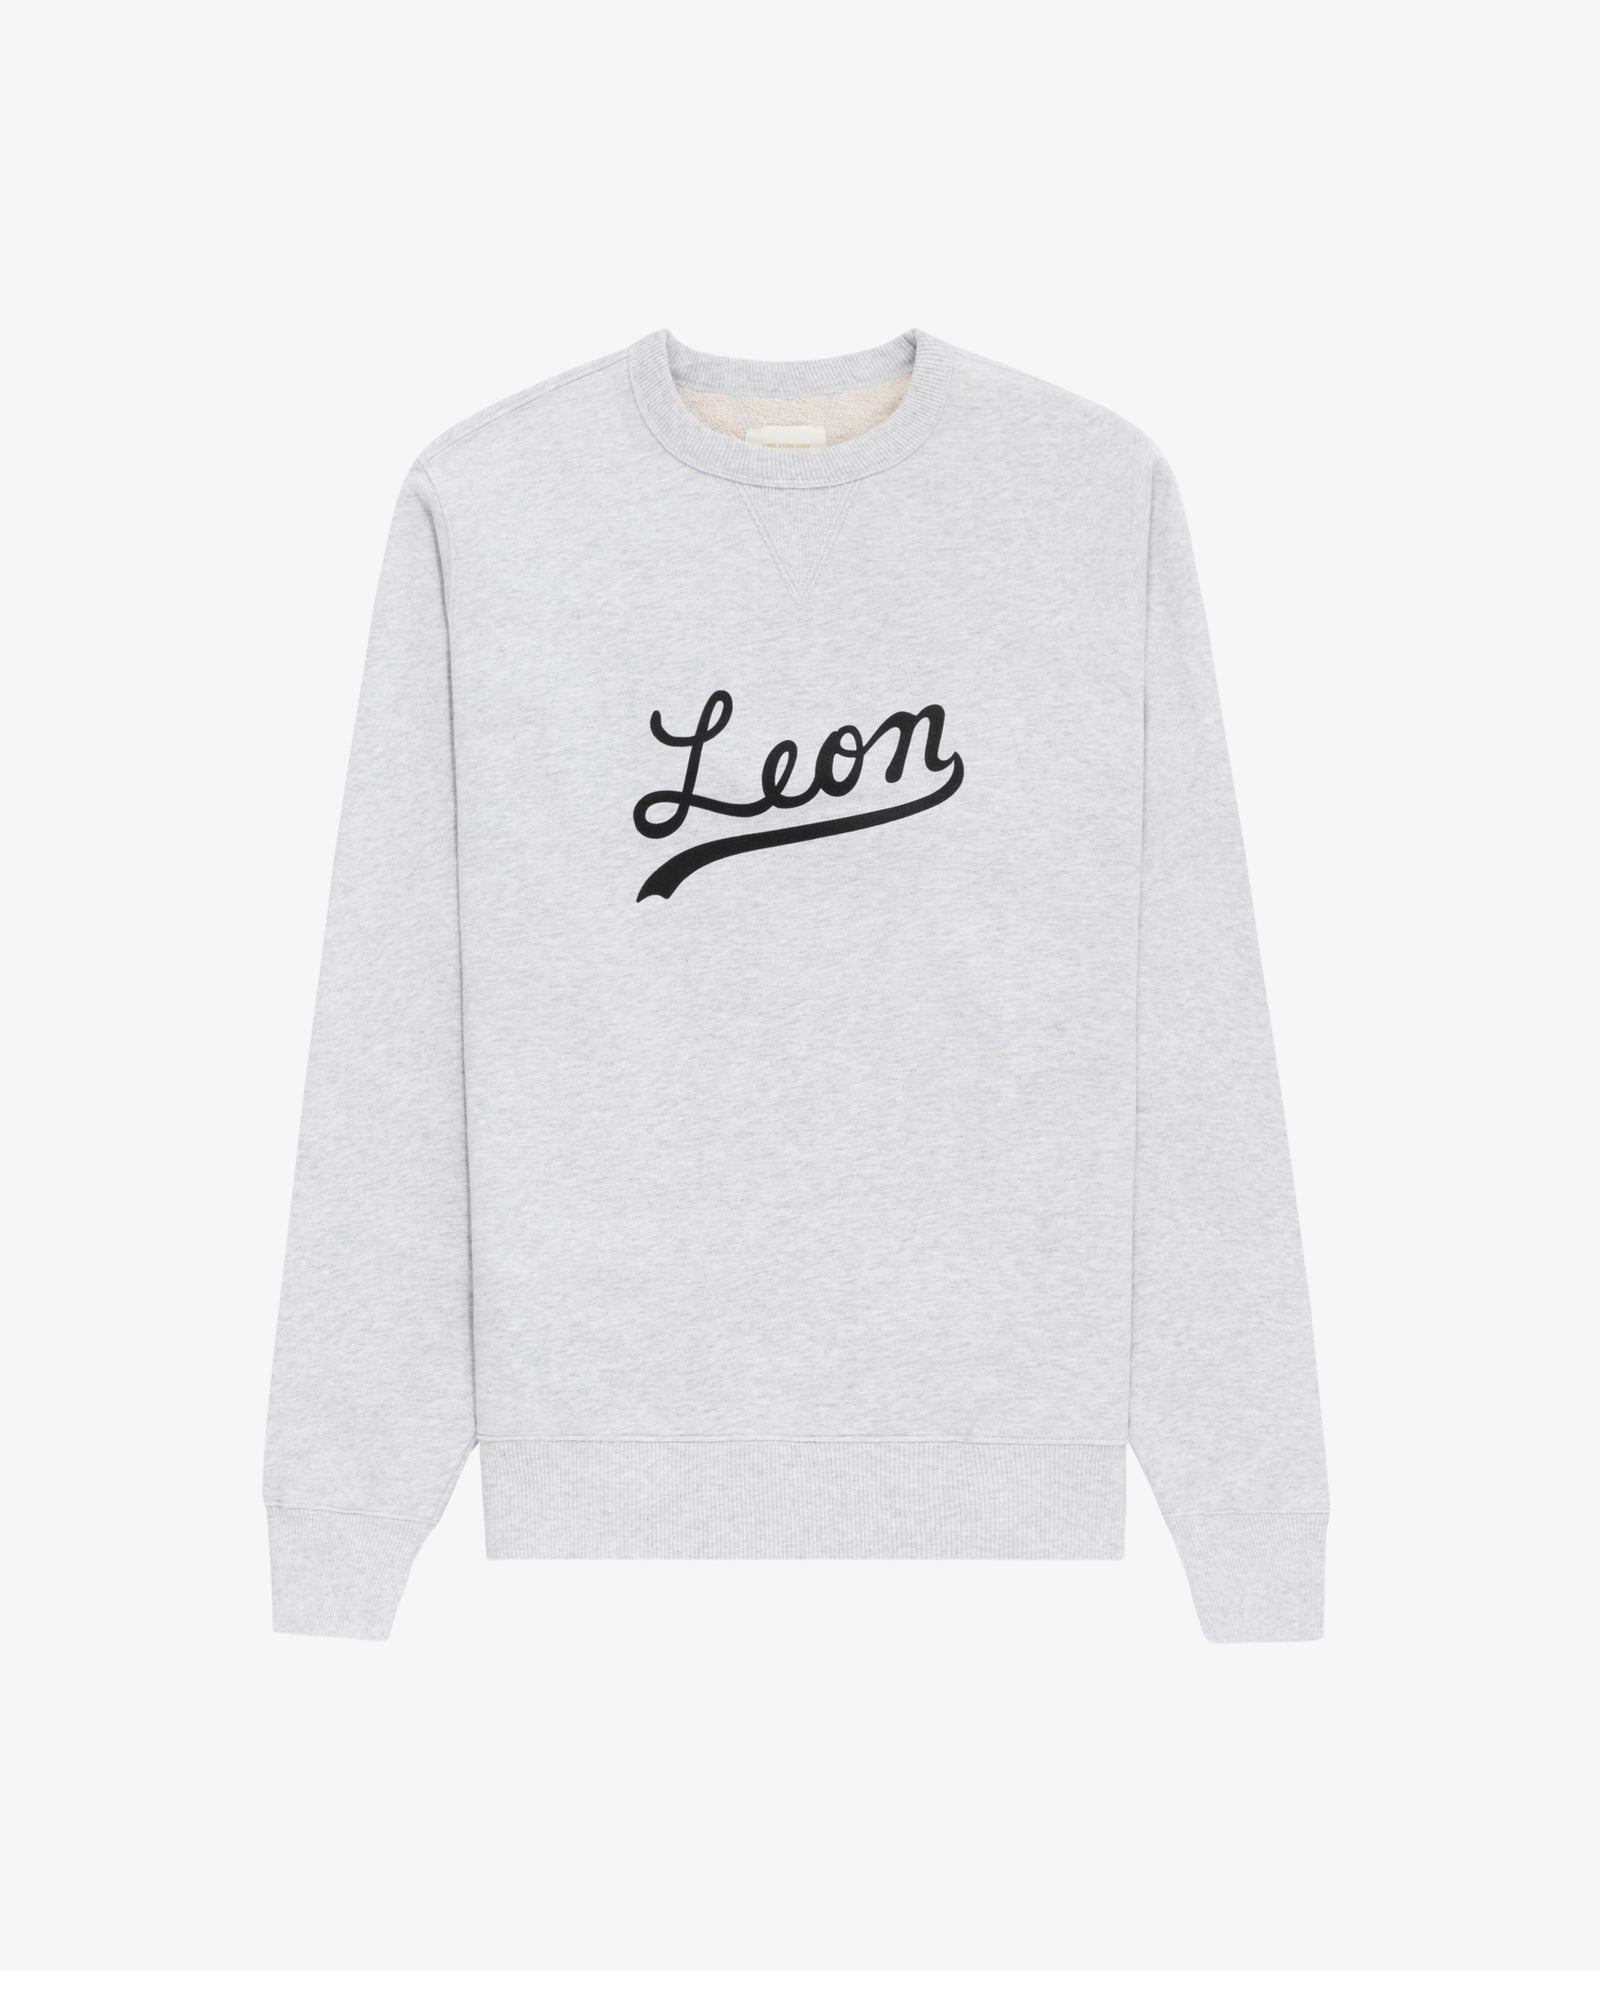 Sweatshirt Aime Leon Dore White size M International in Cotton